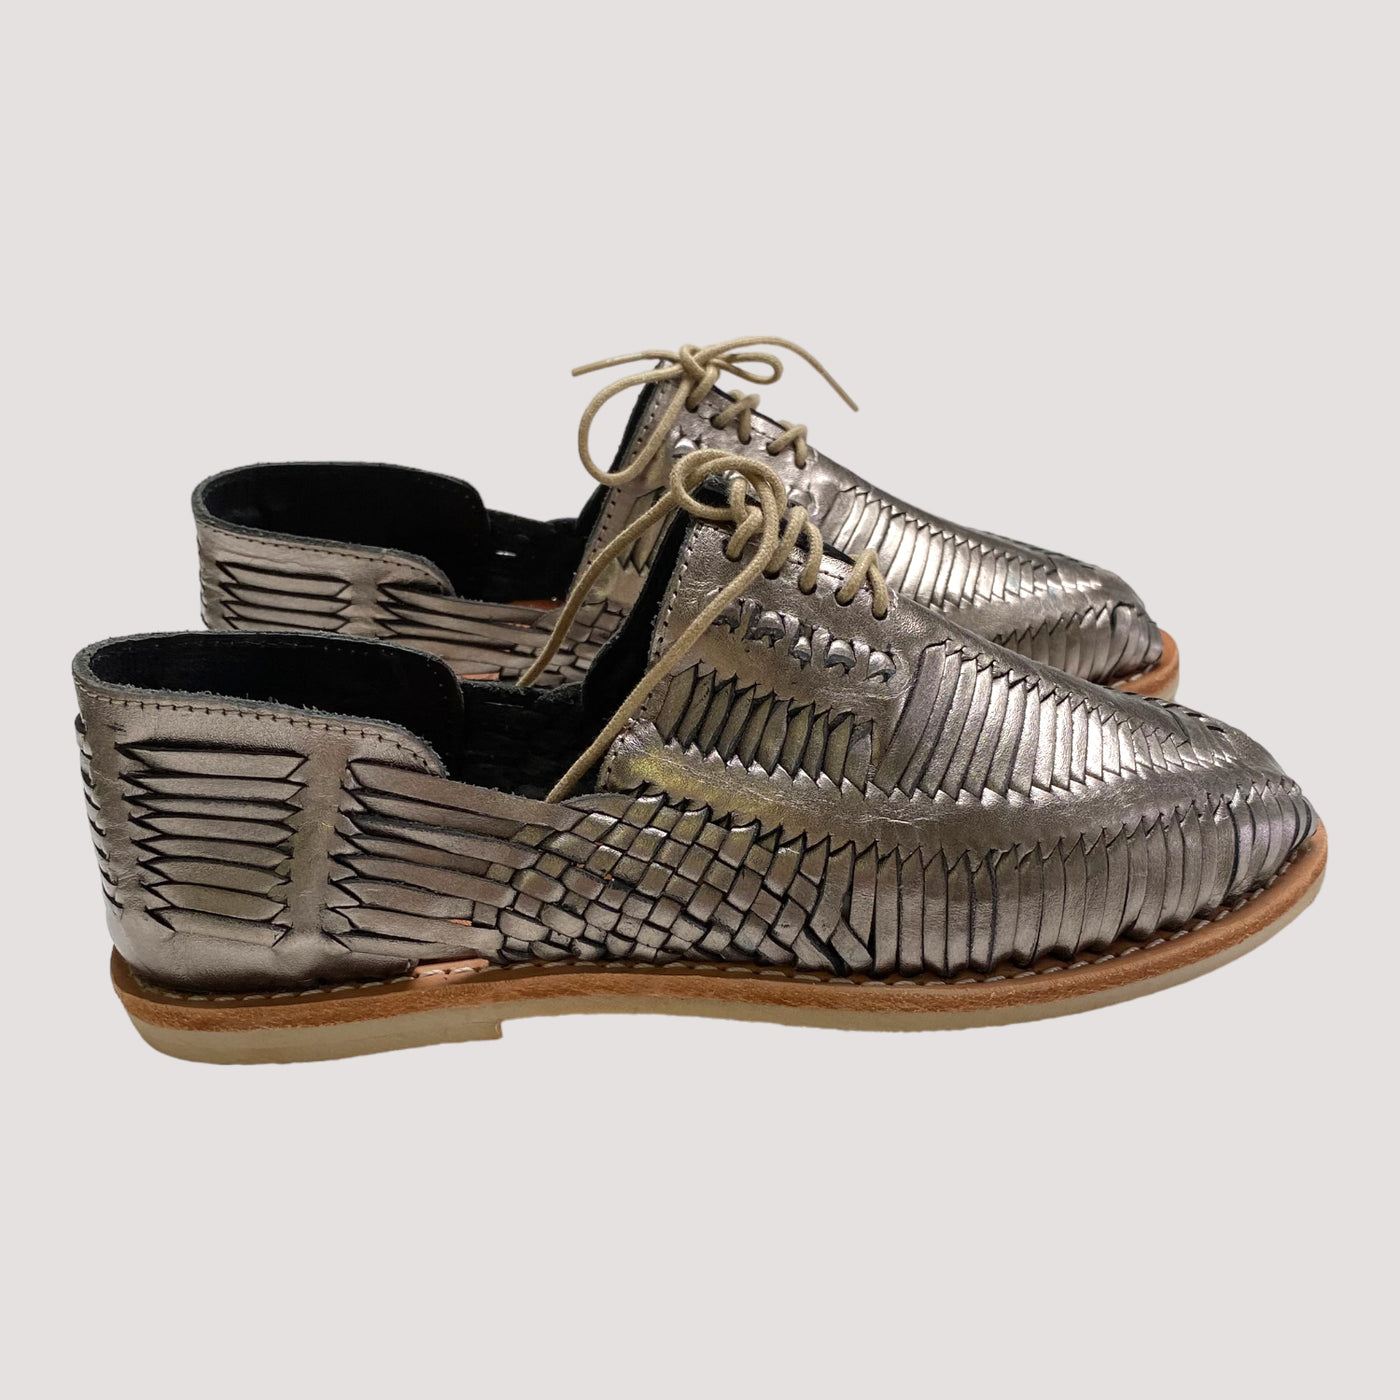 Benito shoes, antimony | 37